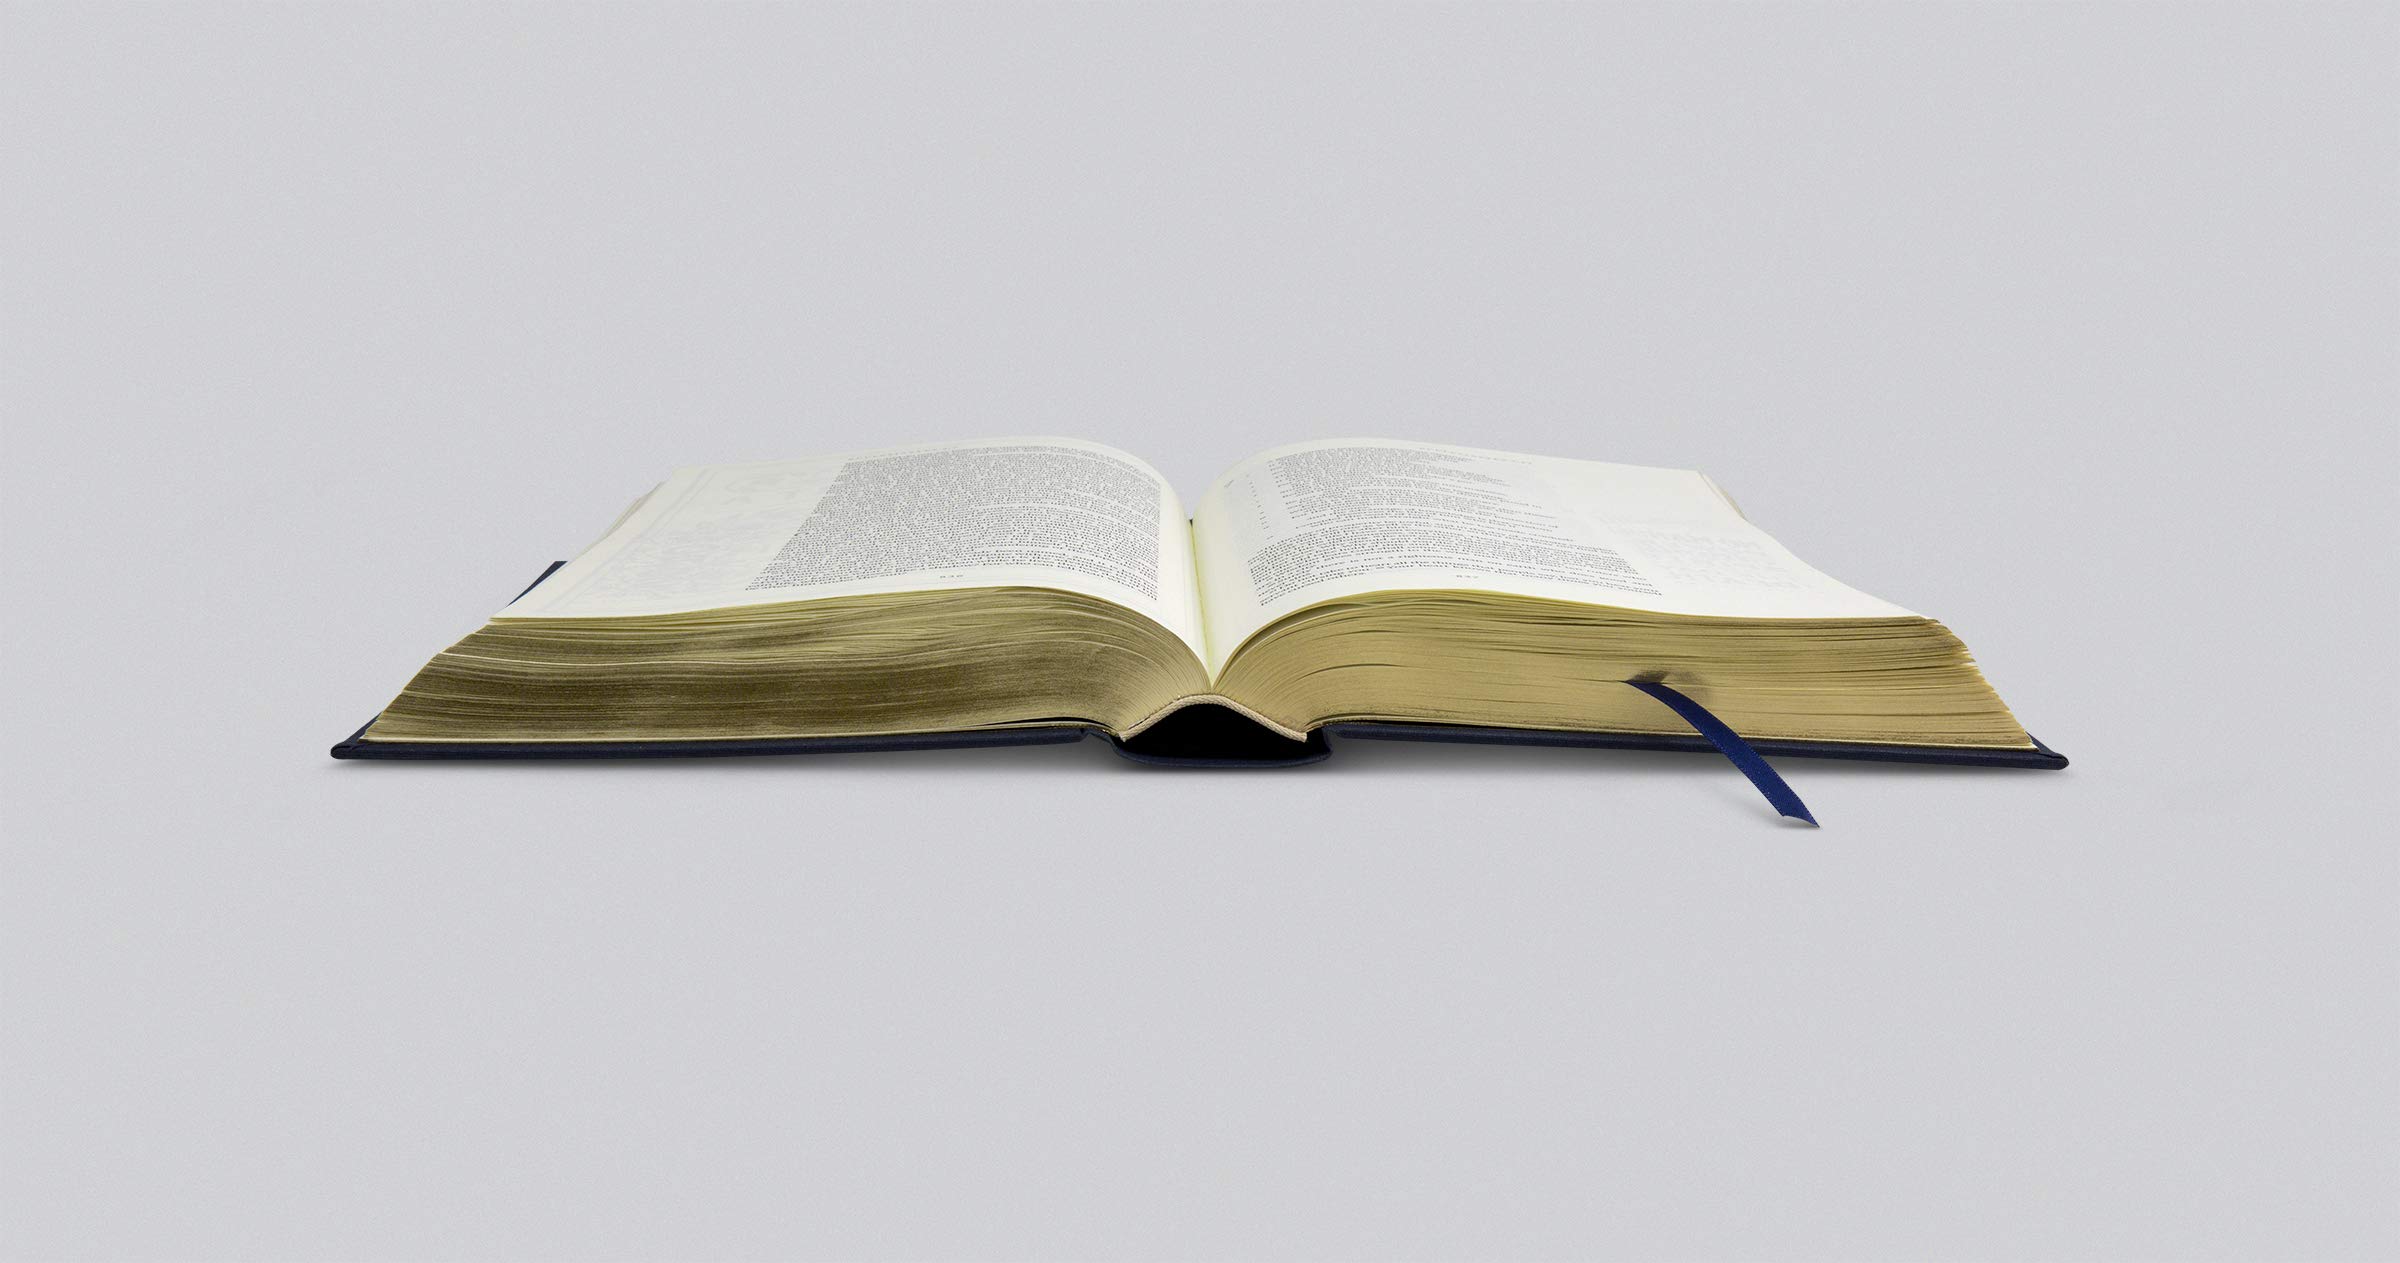 ESV Illuminated Bible, Art Journaling Edition (Cloth over Board, Navy)